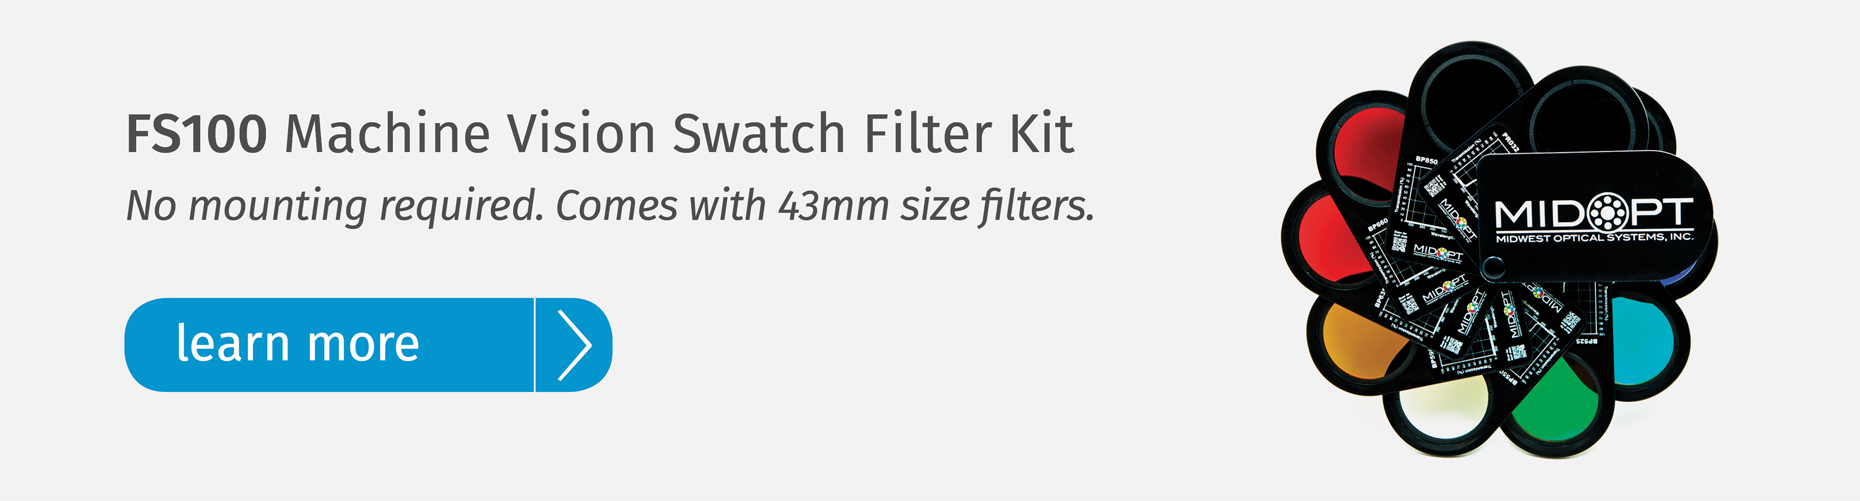 MidOpt FS100 Machine Vision Bandpass Swatch Filter Test Kit